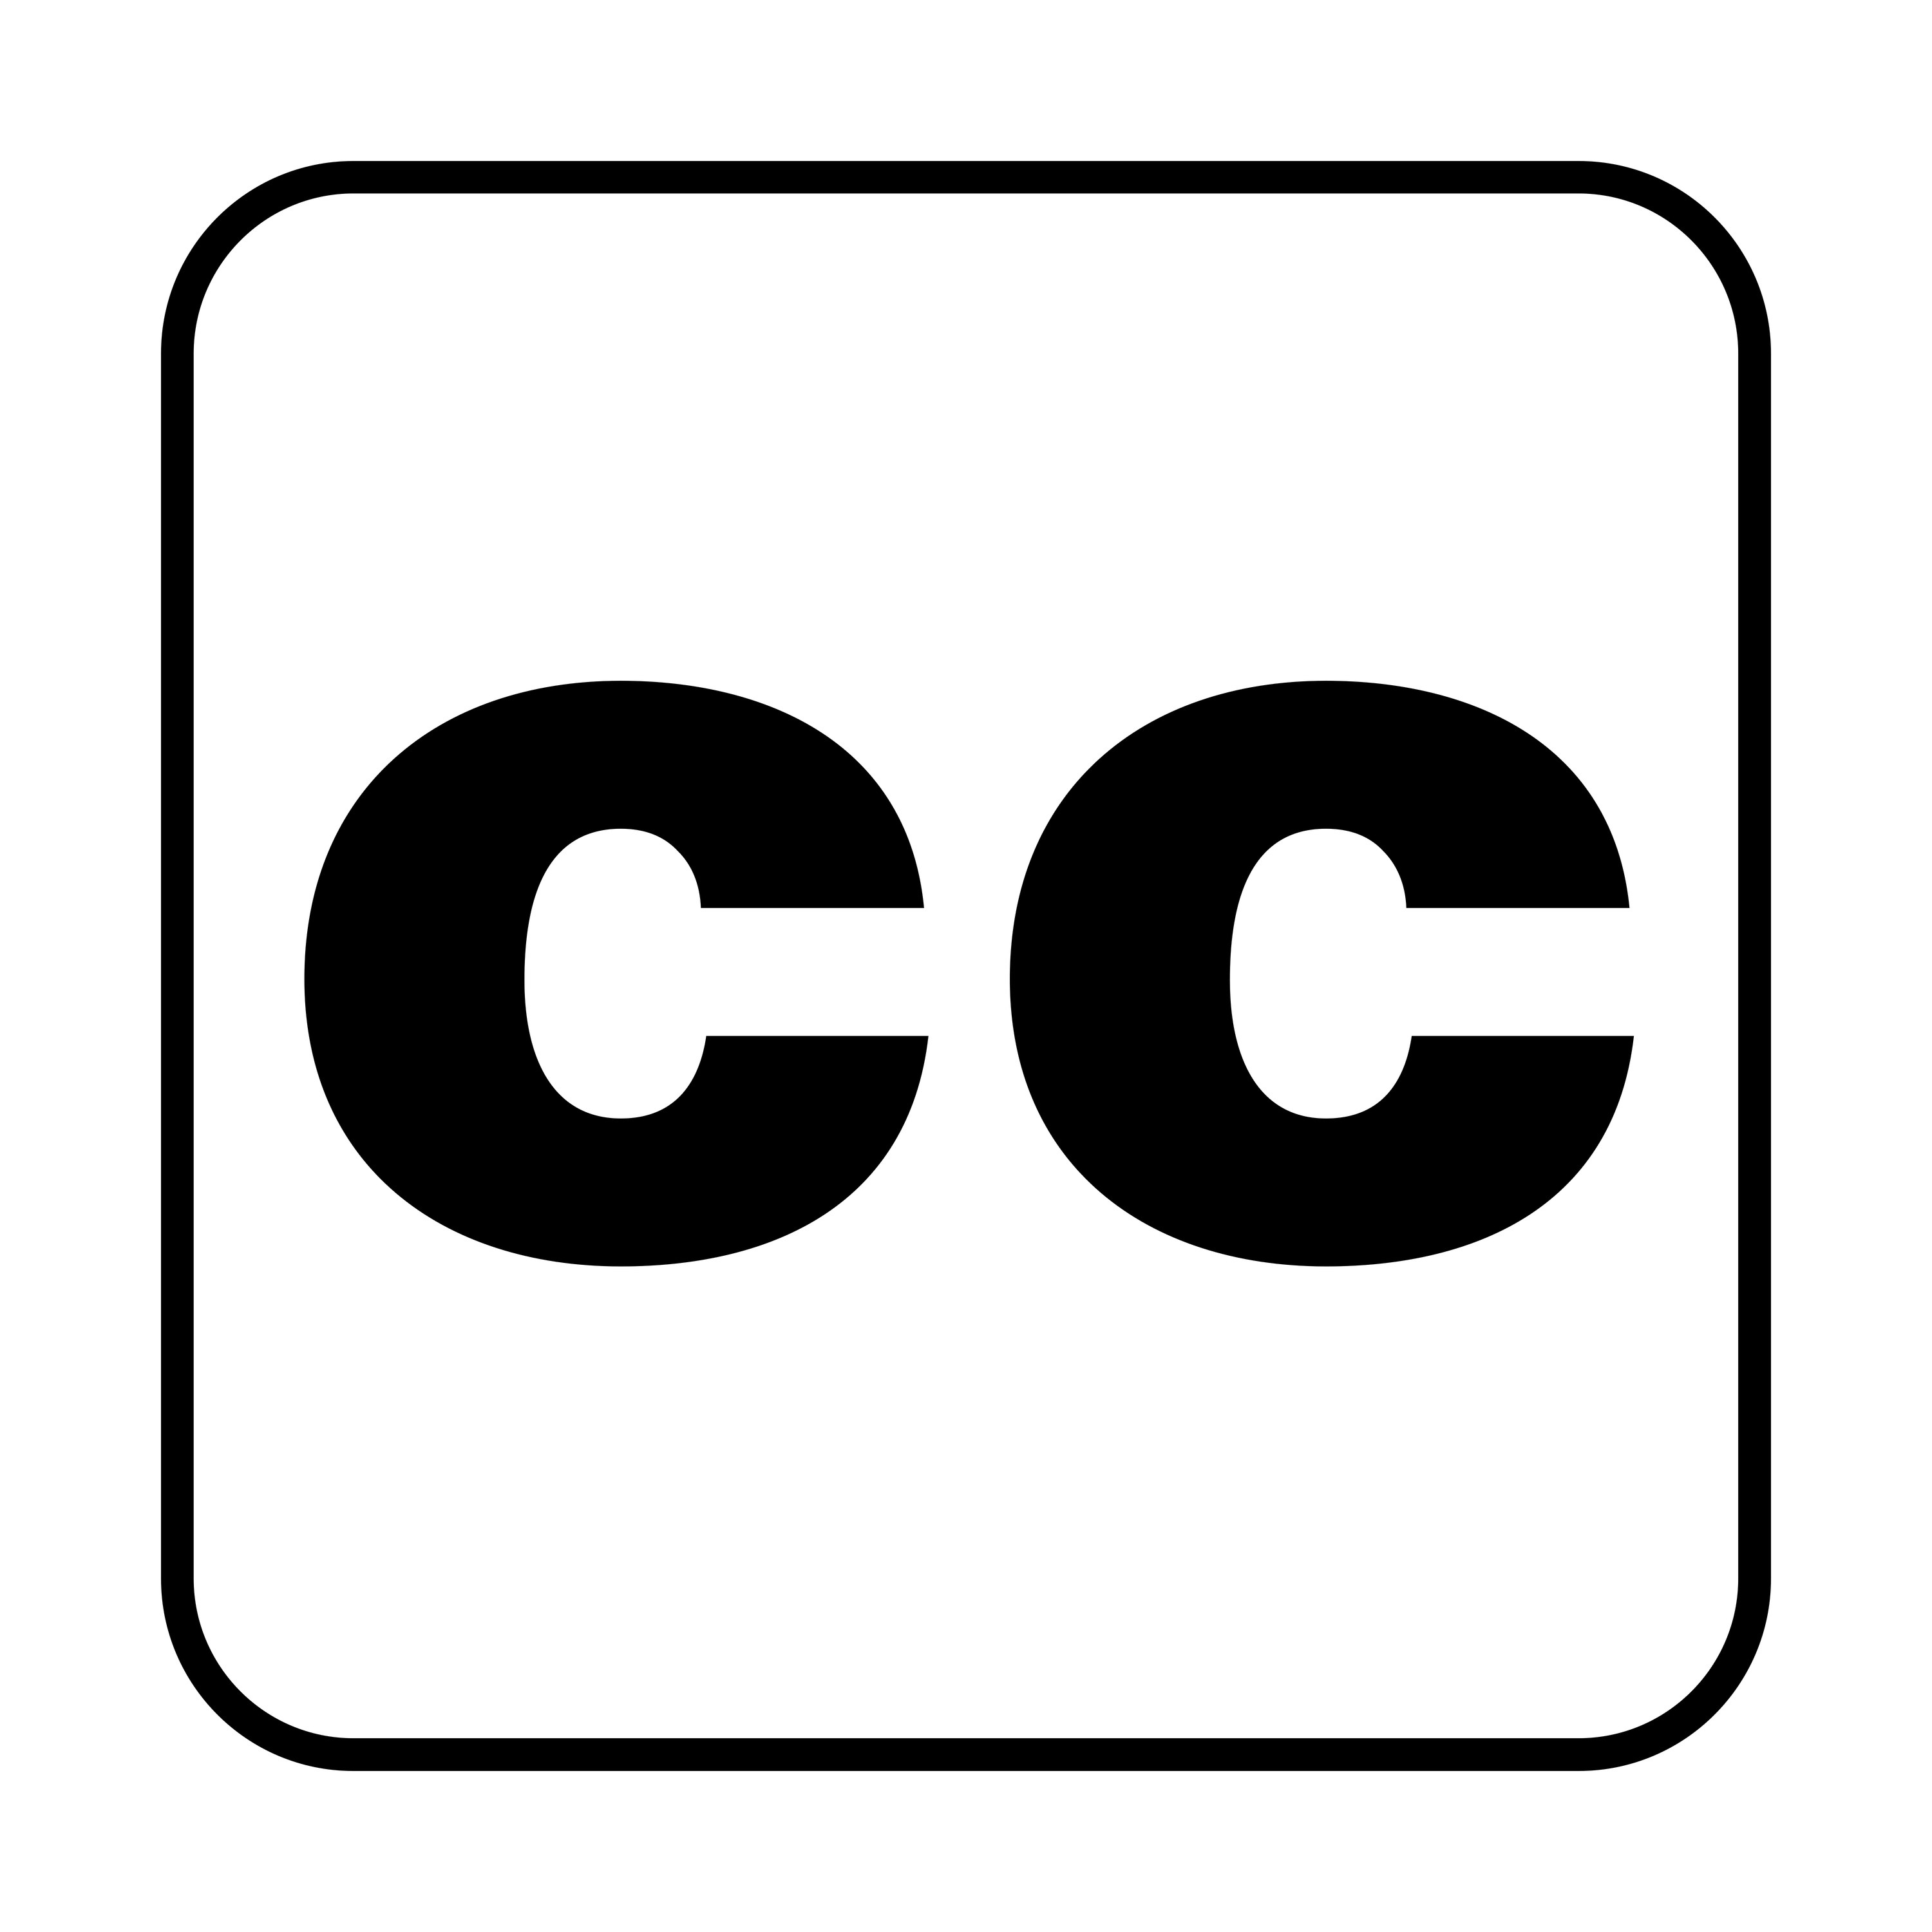 The CC symbol for closed captioning